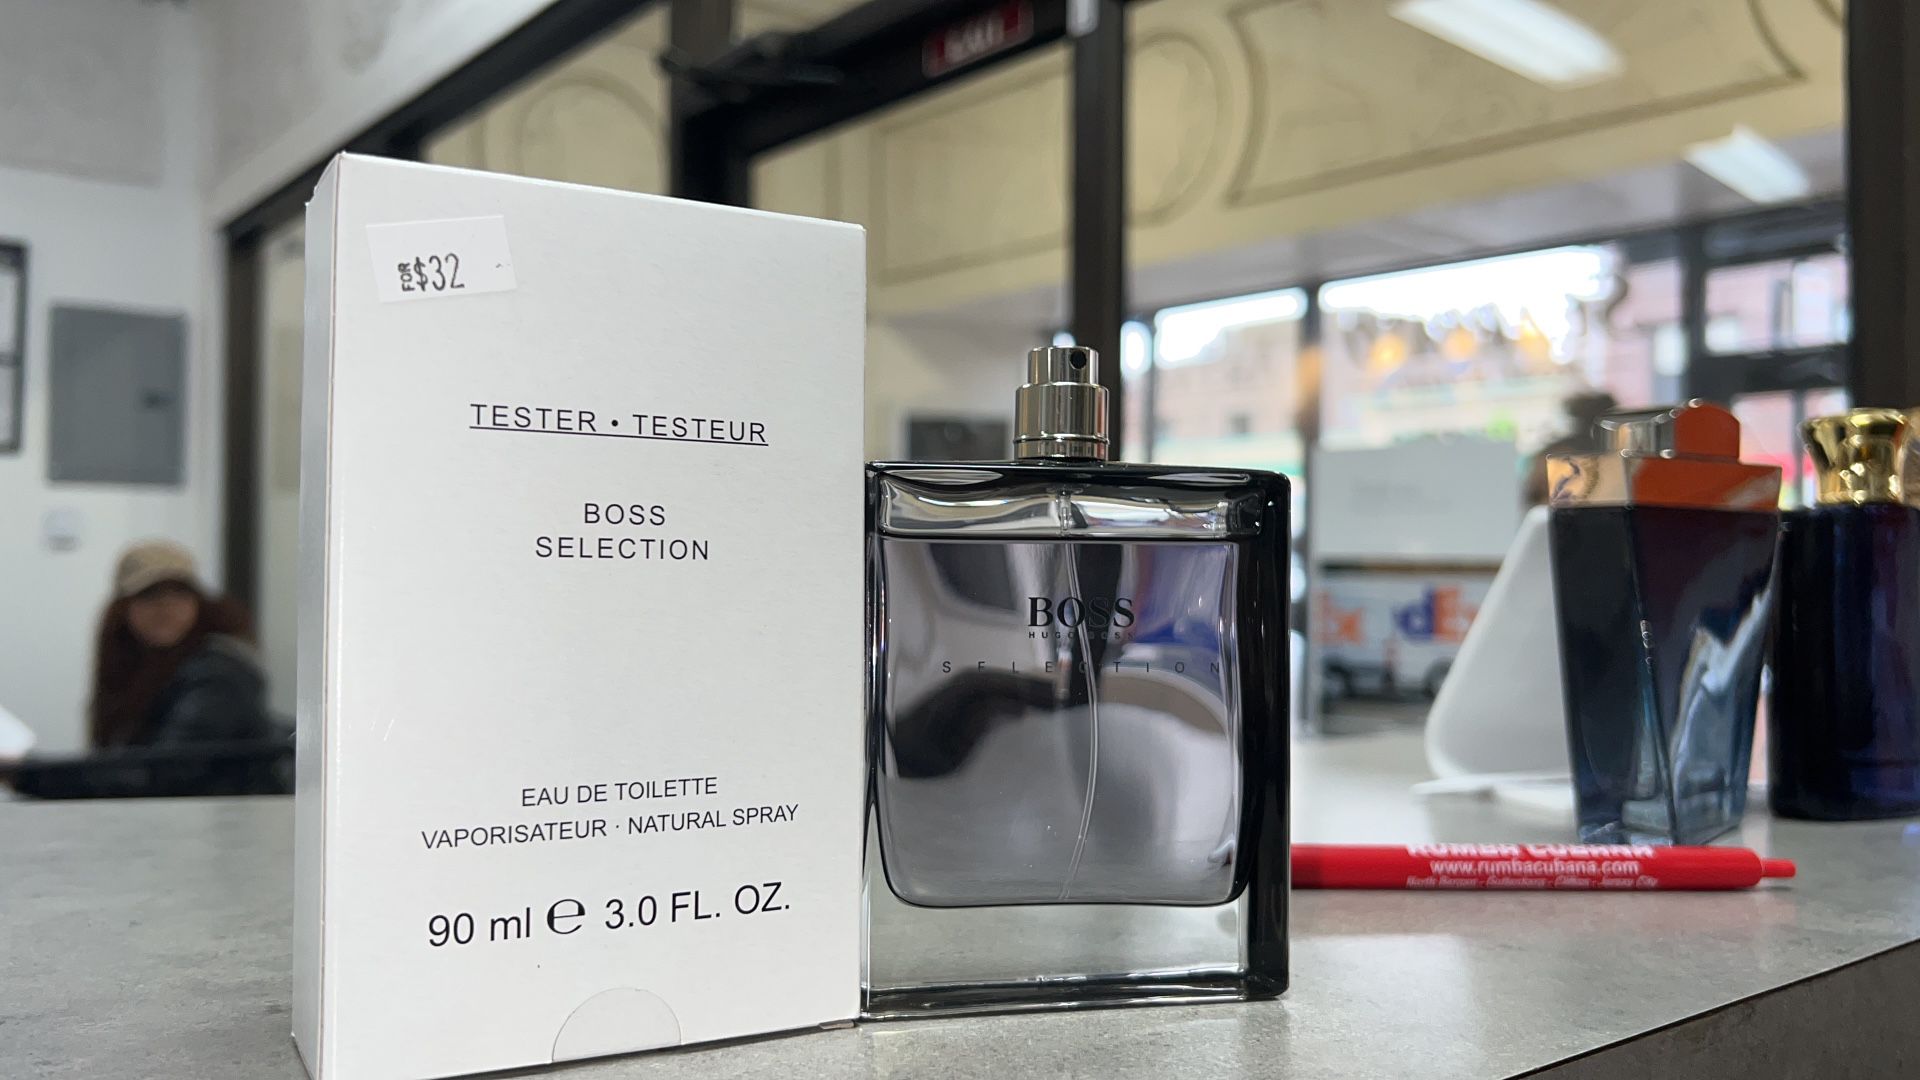 Chanel Allure Eau De Parfum 3.4 oz. Tester Spray (BRAND NEW W/ TESTER  BOX)WOMEN FRAGRANCE PERFUME for Sale in Philadelphia, PA - OfferUp